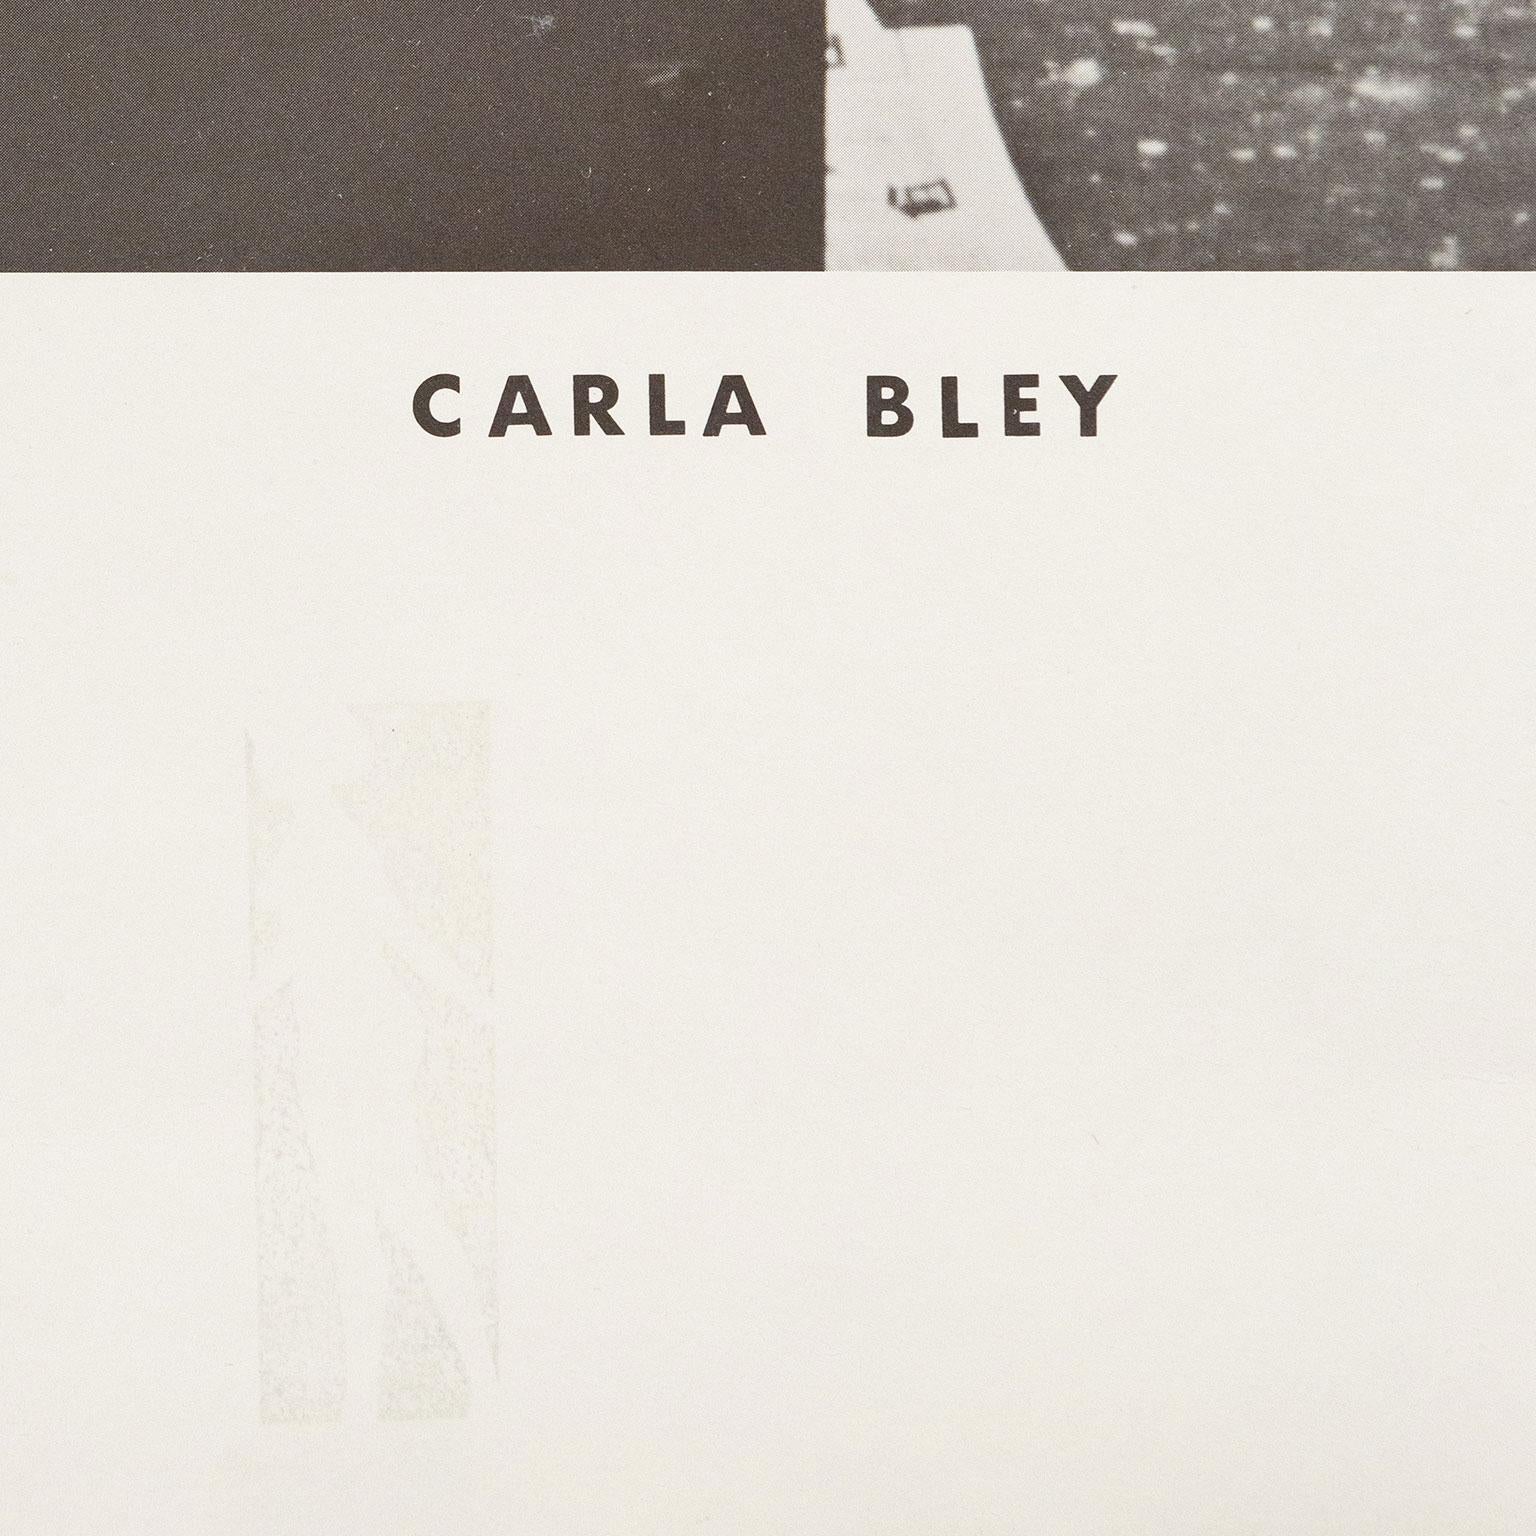 Carla Bley, Walking Woman - Conceptual Photograph by Michael Snow